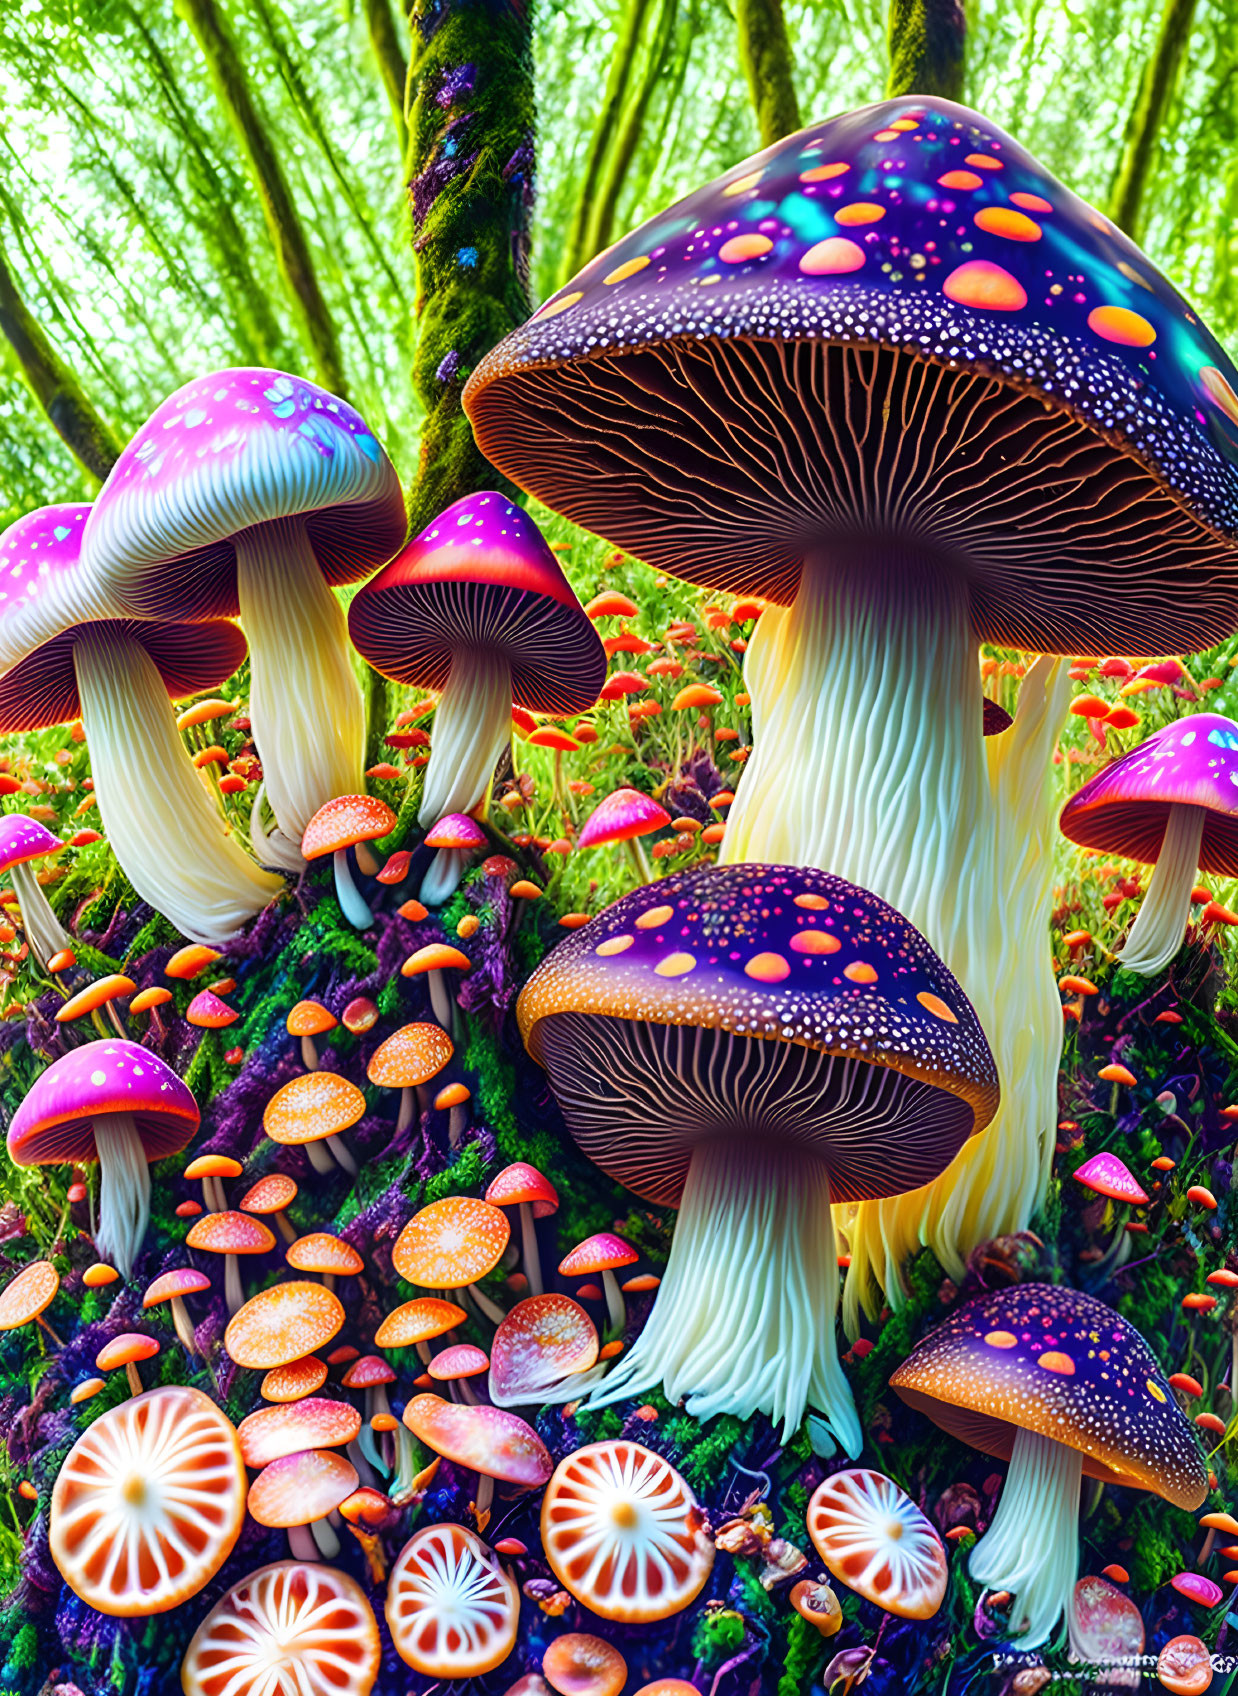 The woods are full of winecap mushrooms